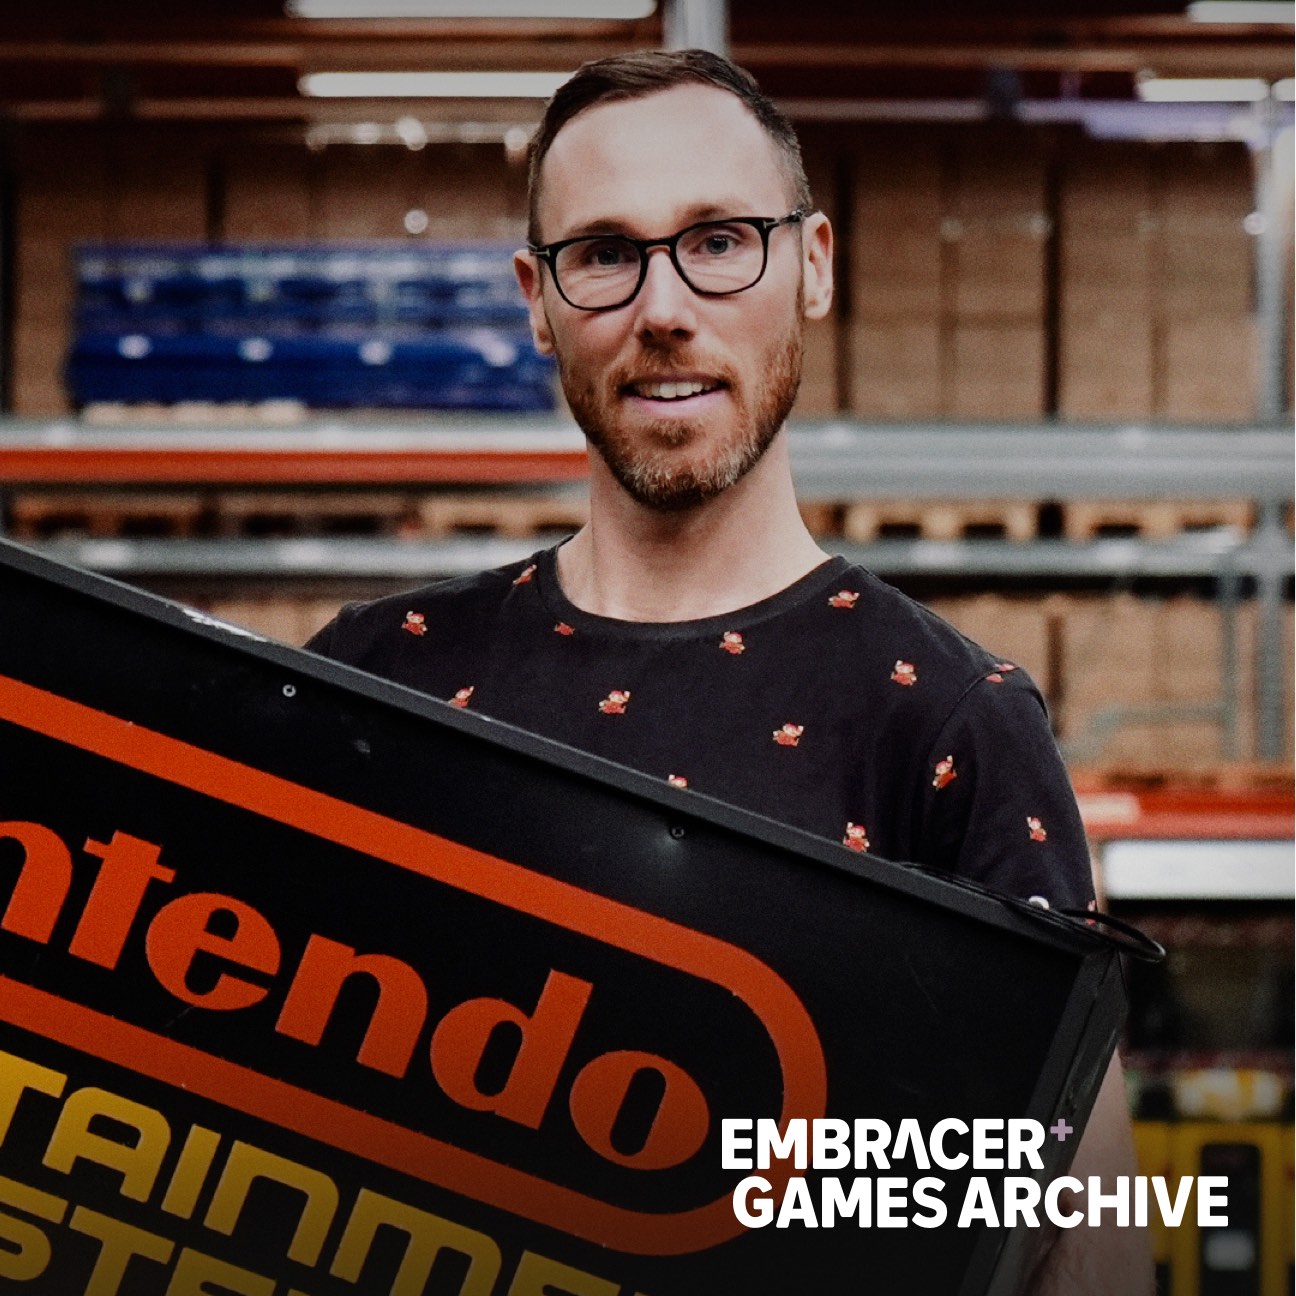 David Boström, CEO Embracer Games Archive